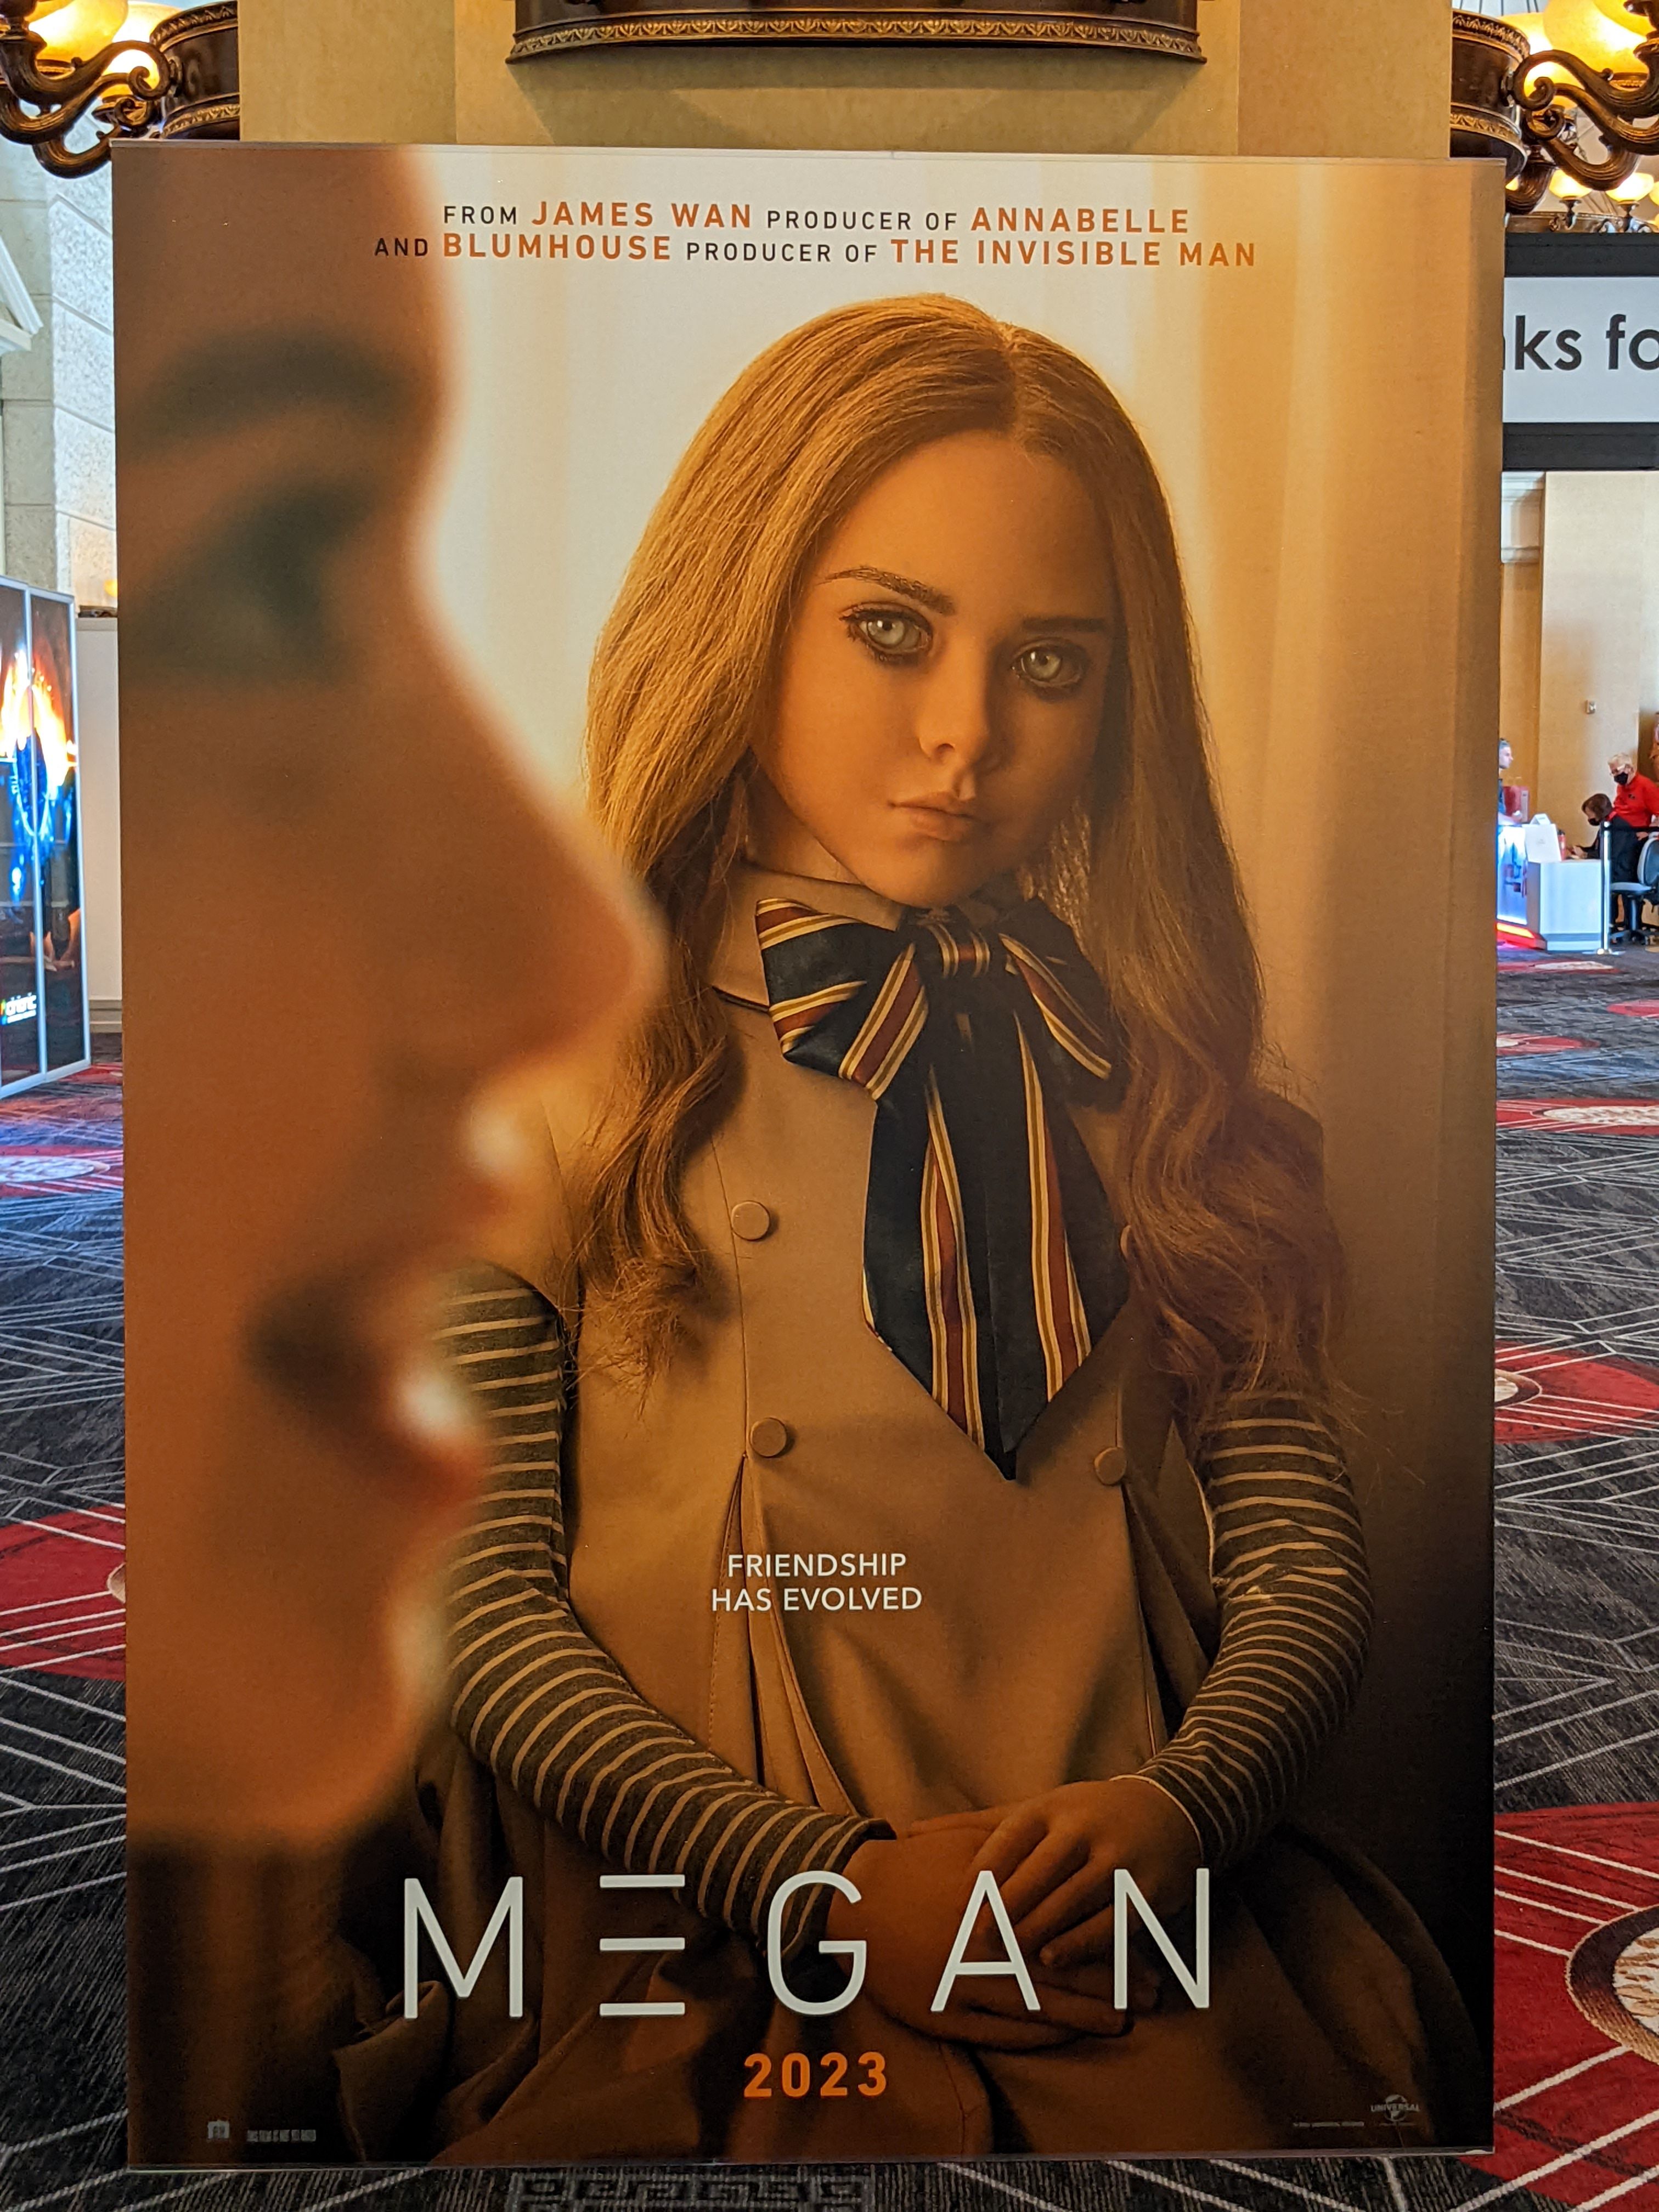 Megan movie poster revealed at CinemaCon